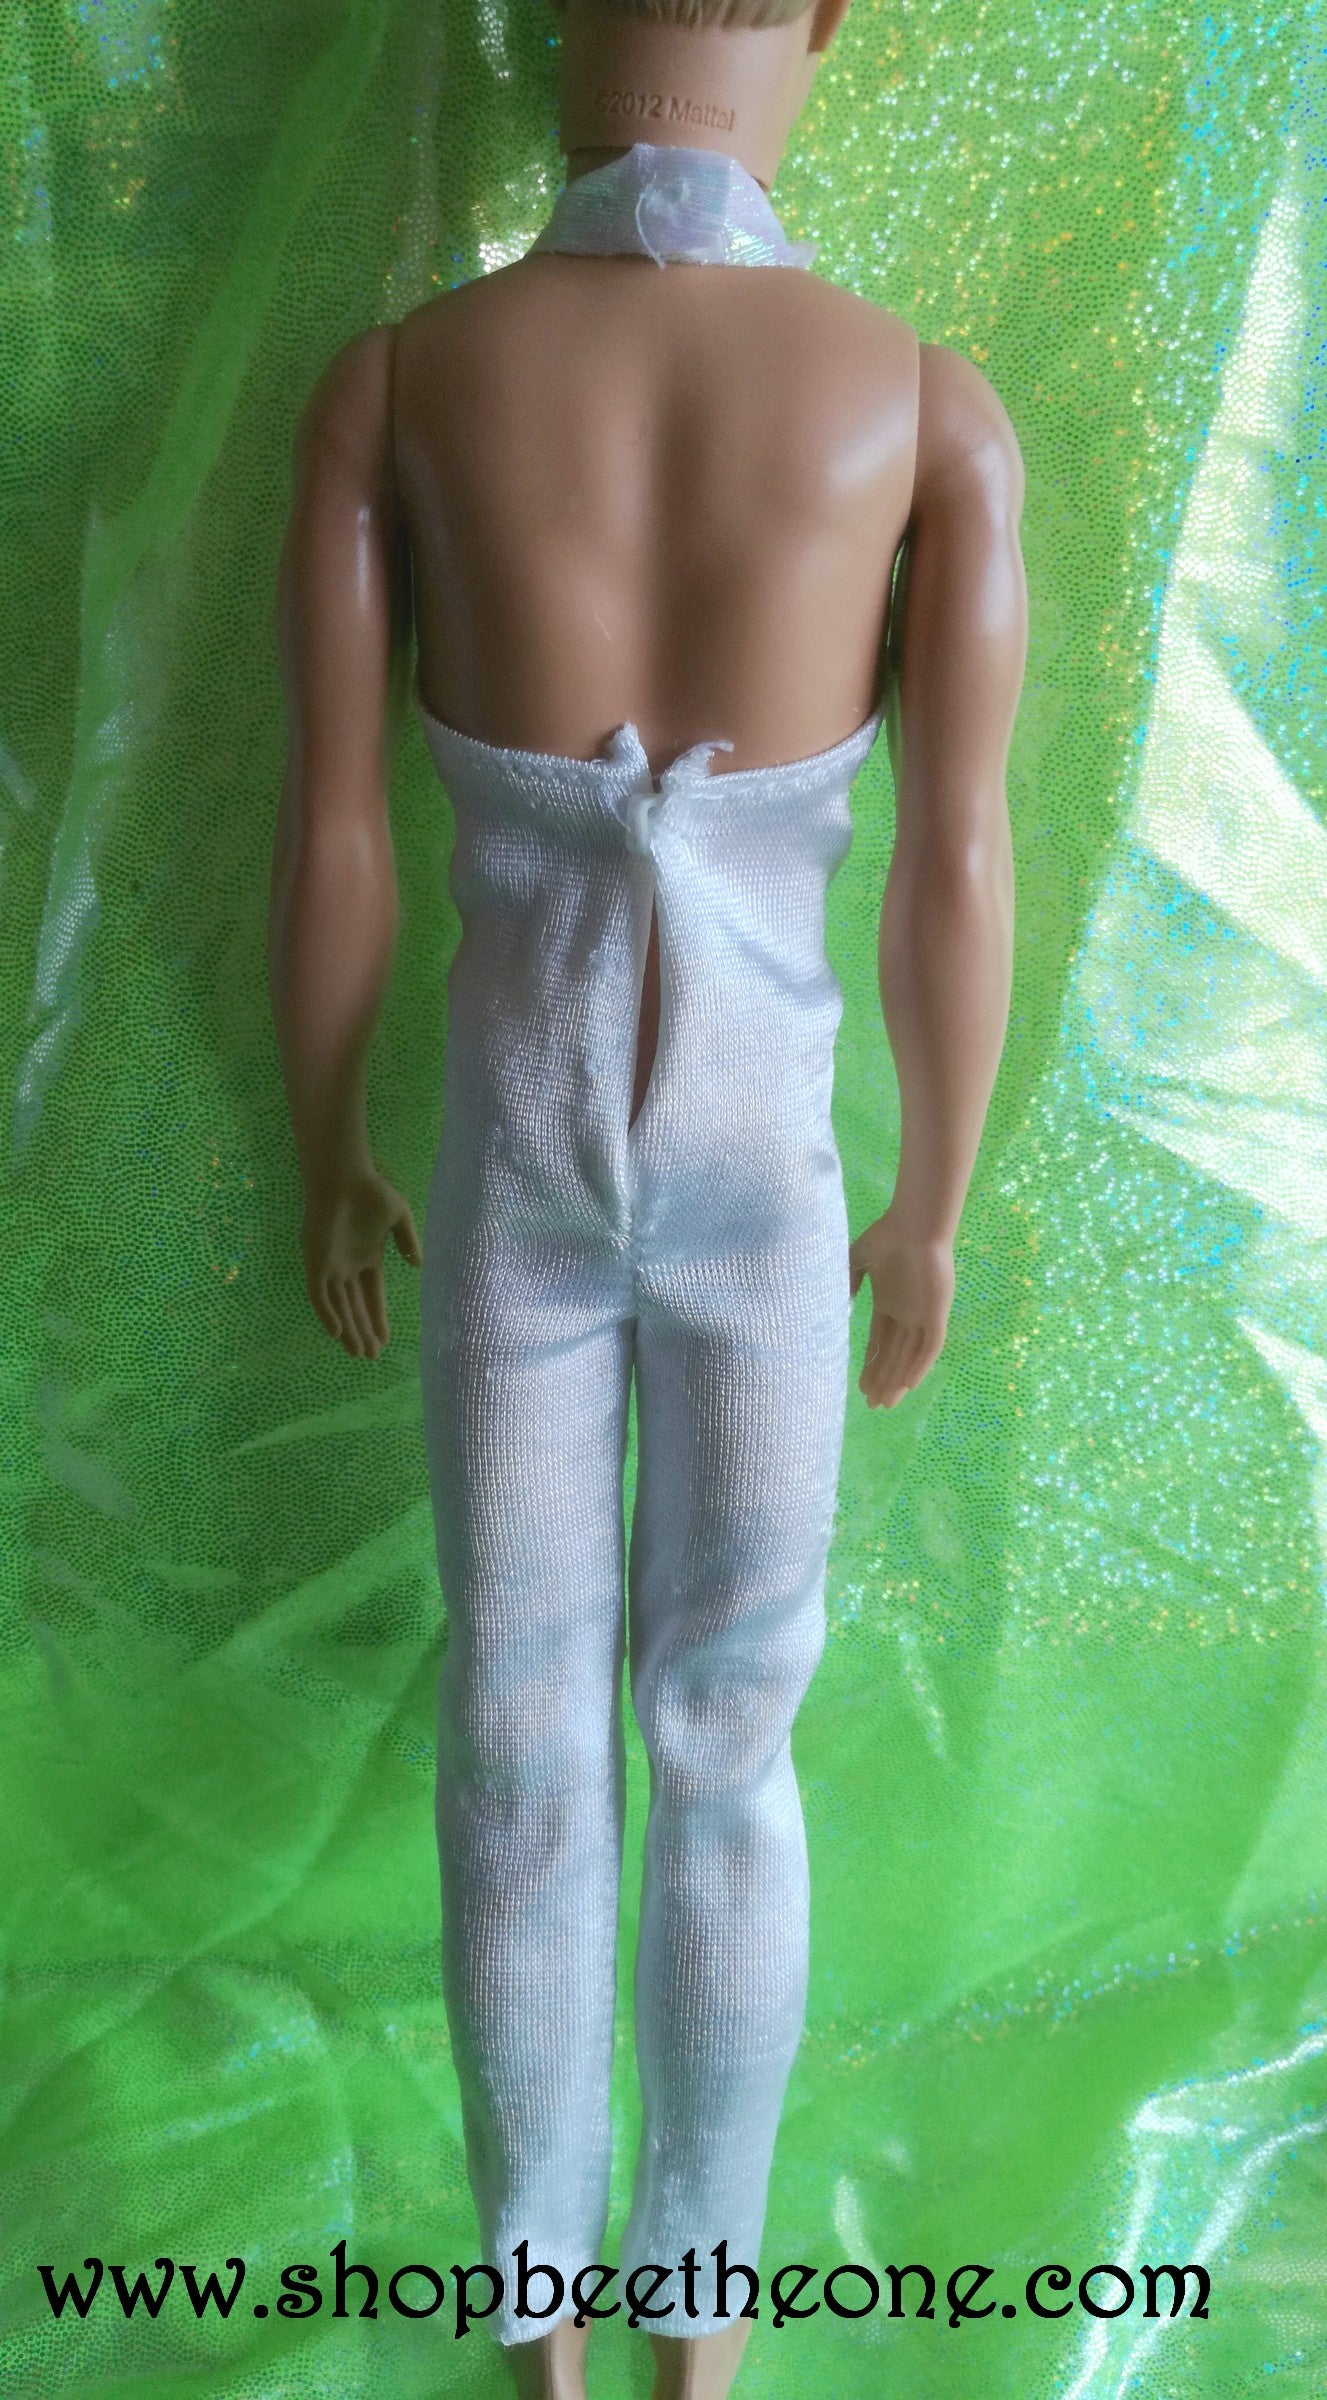 Mon 1er Ken Prince - Mattel 1989 - Vêtement